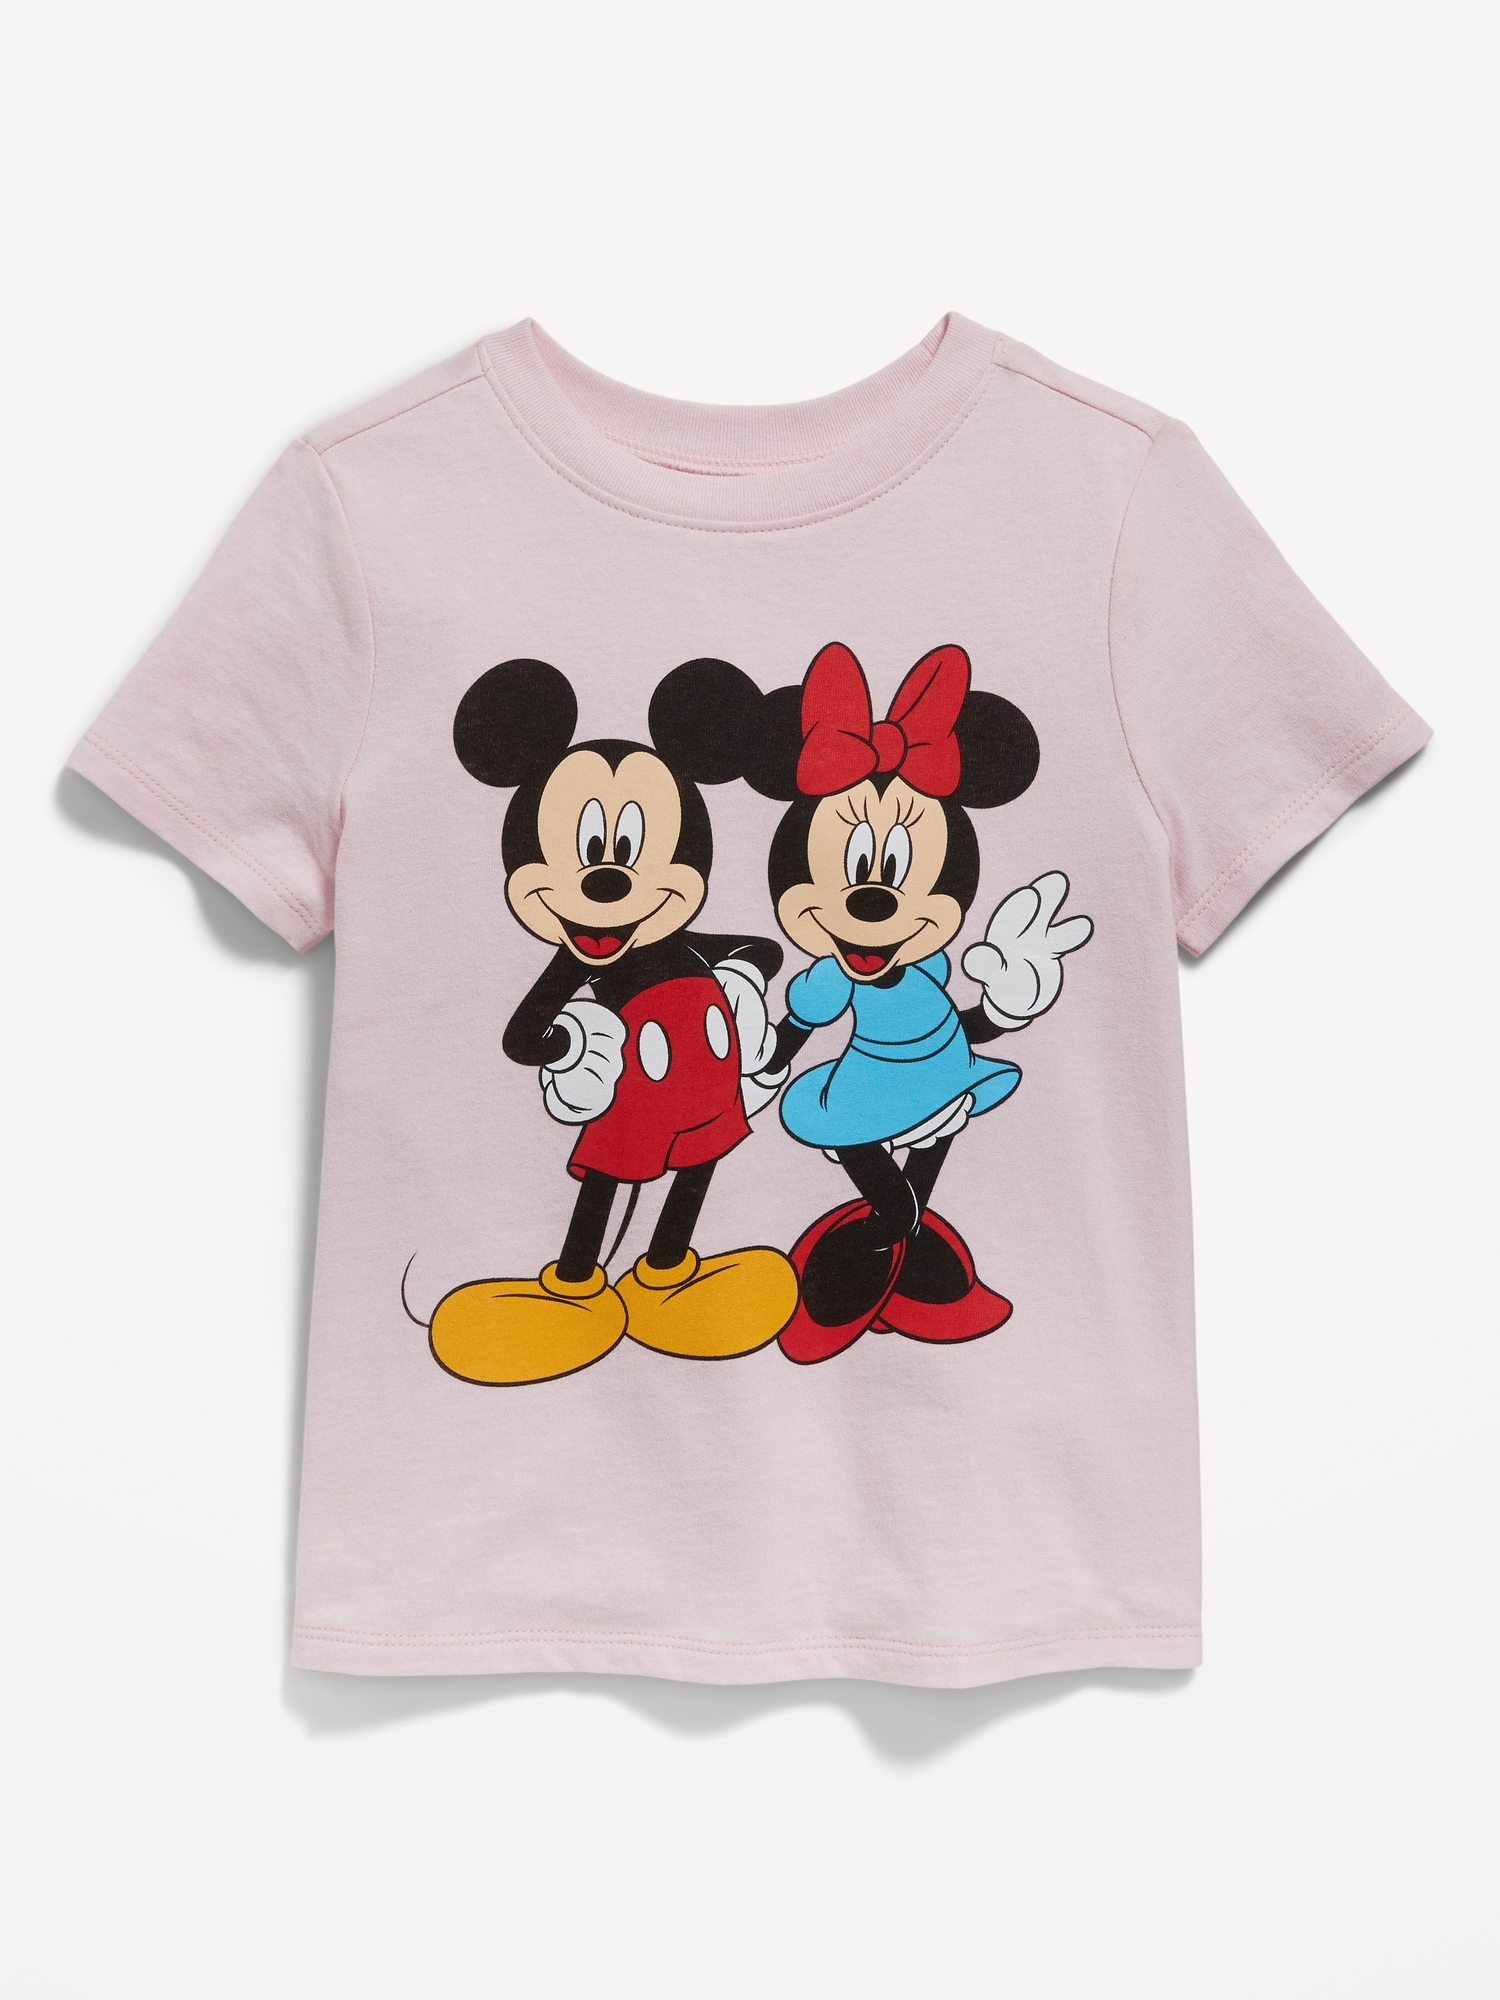 Disney Kids Clothes